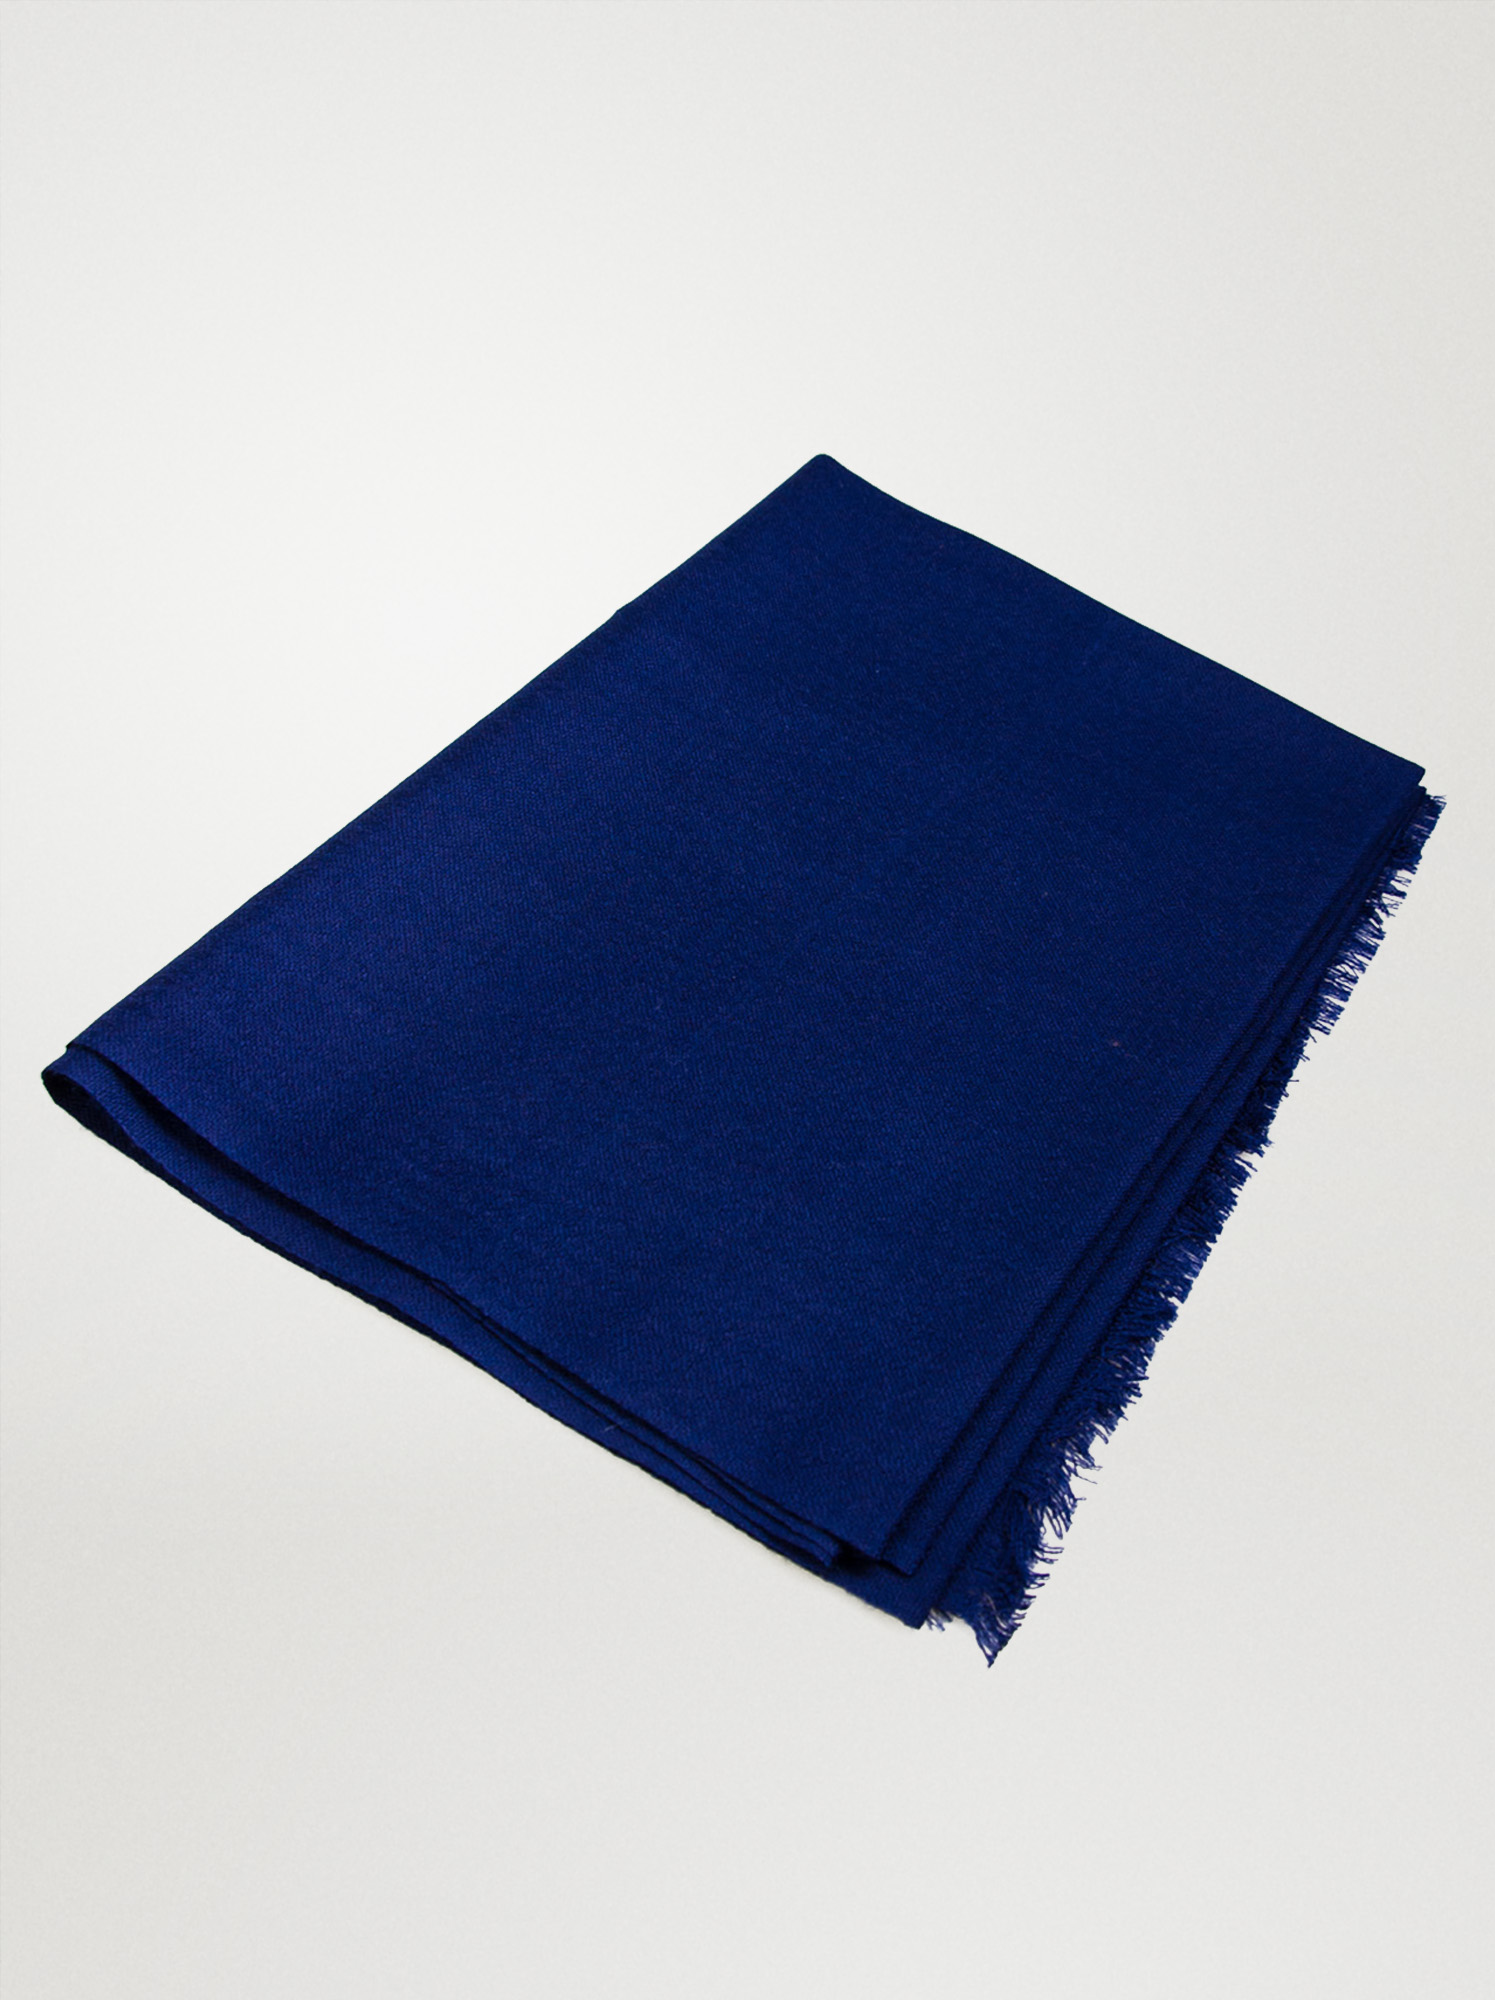 Wool scarf image 2